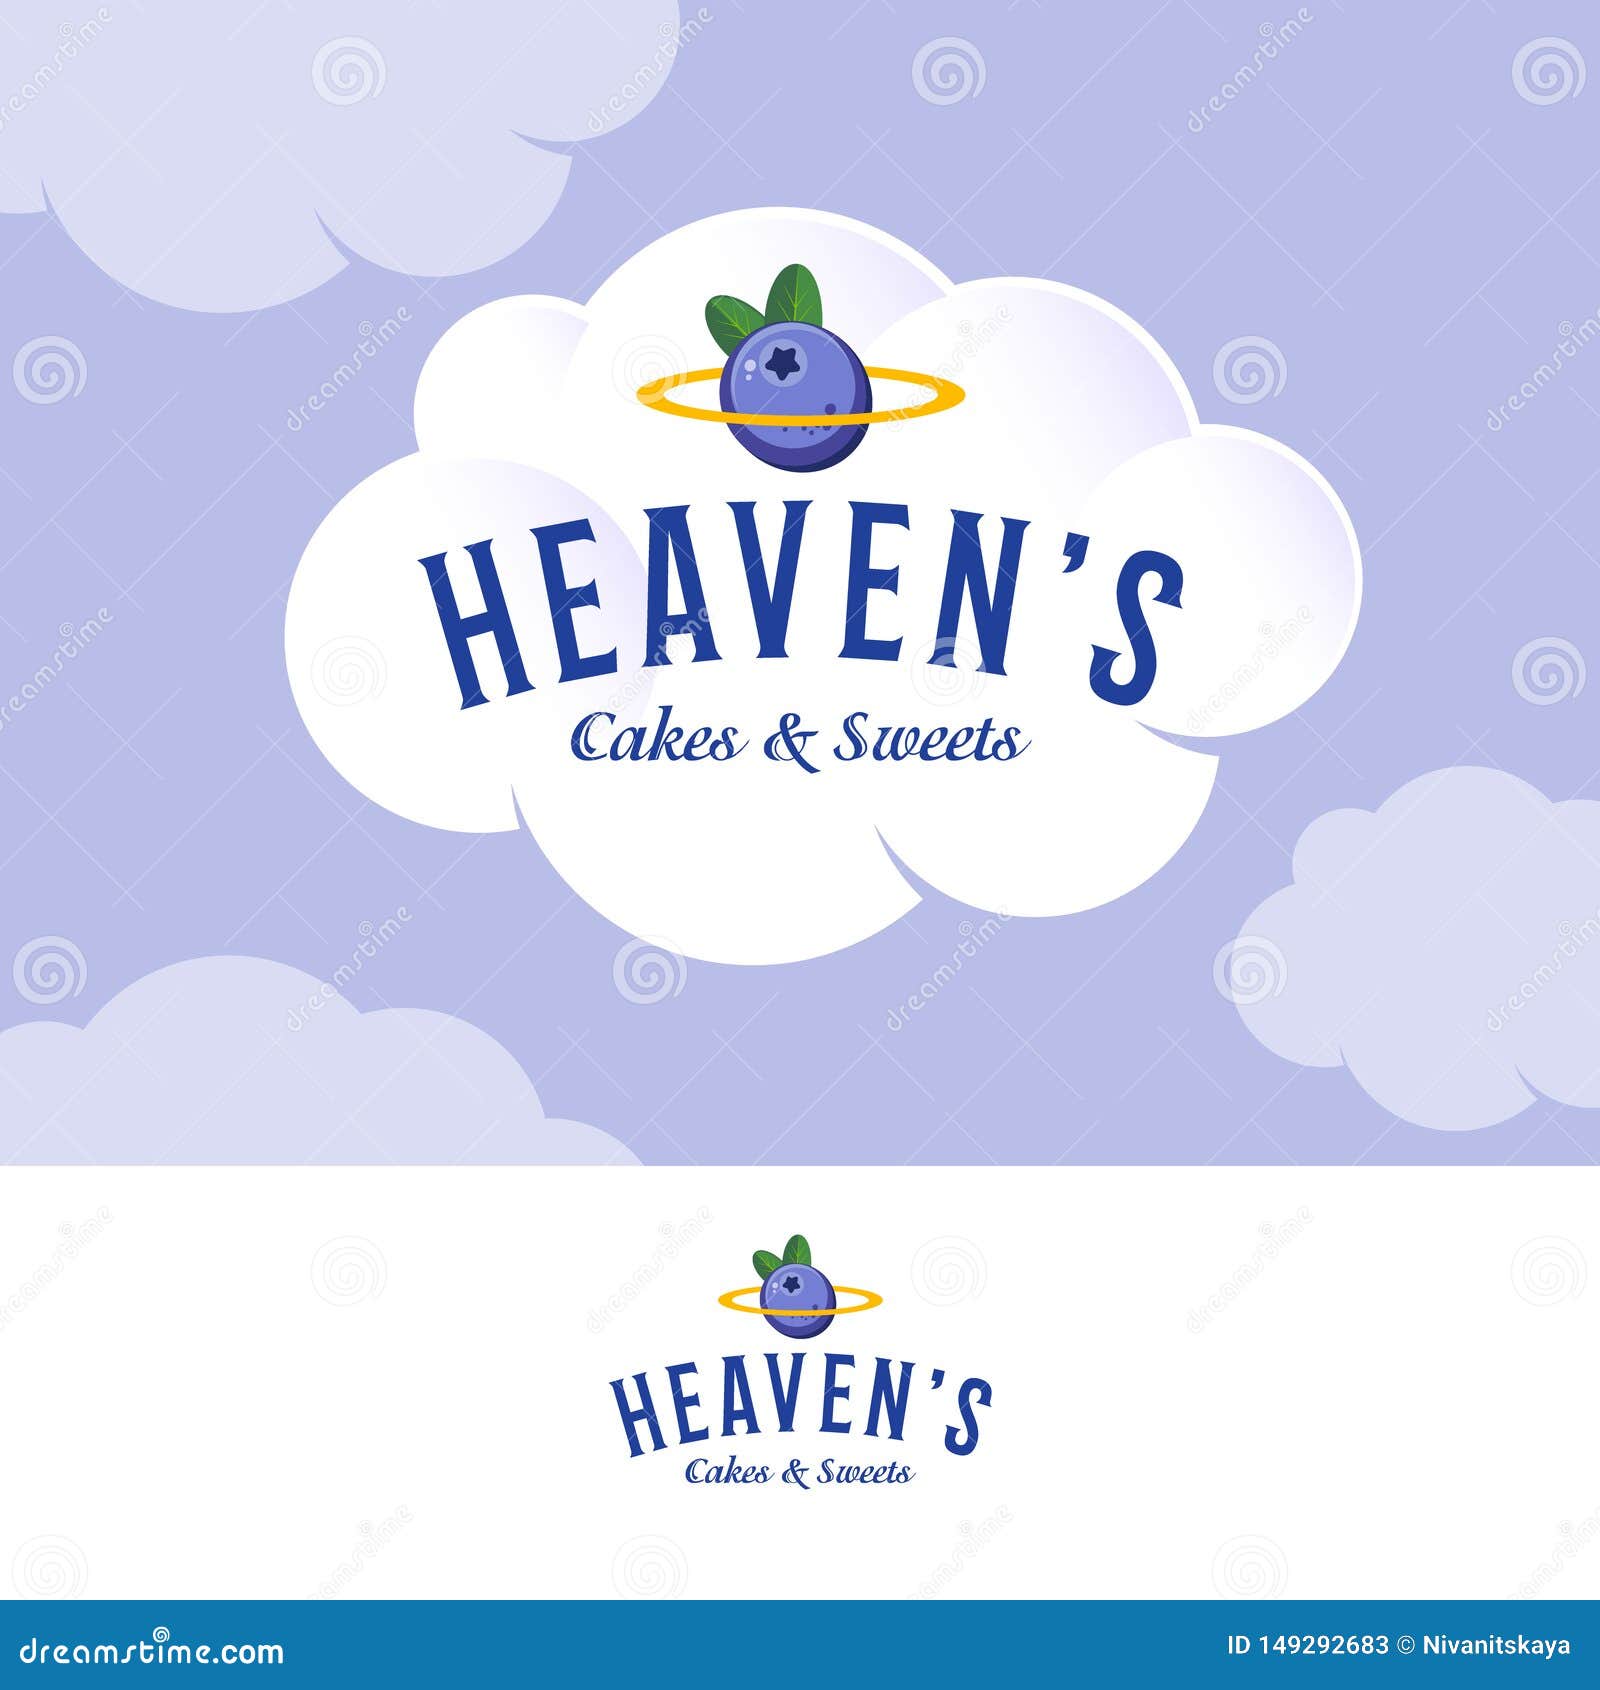 Heavenly Logos